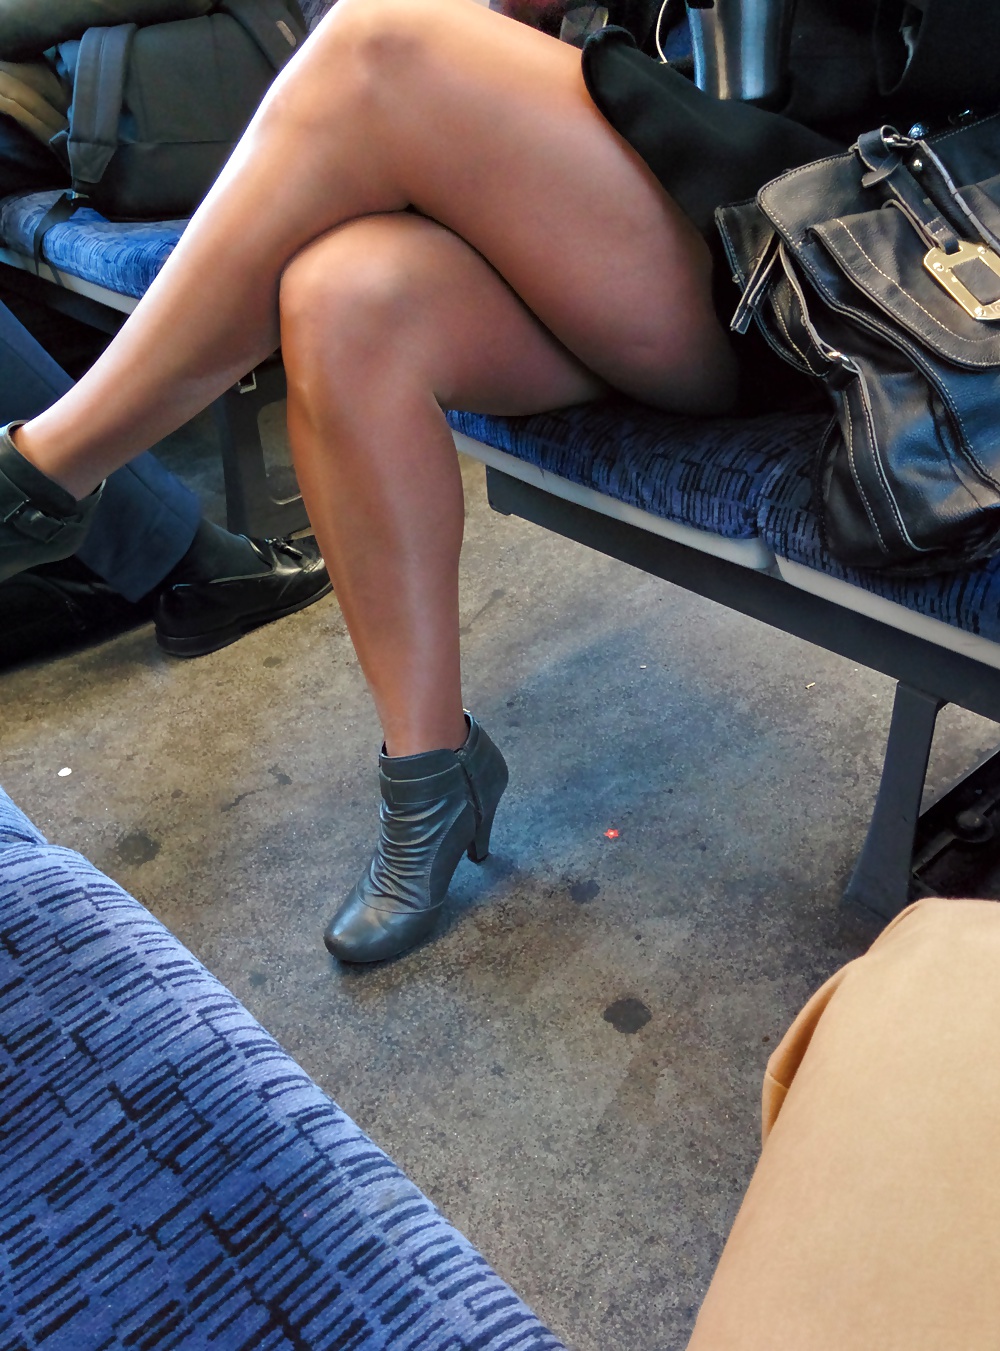 Short skirt slut on the train showing off